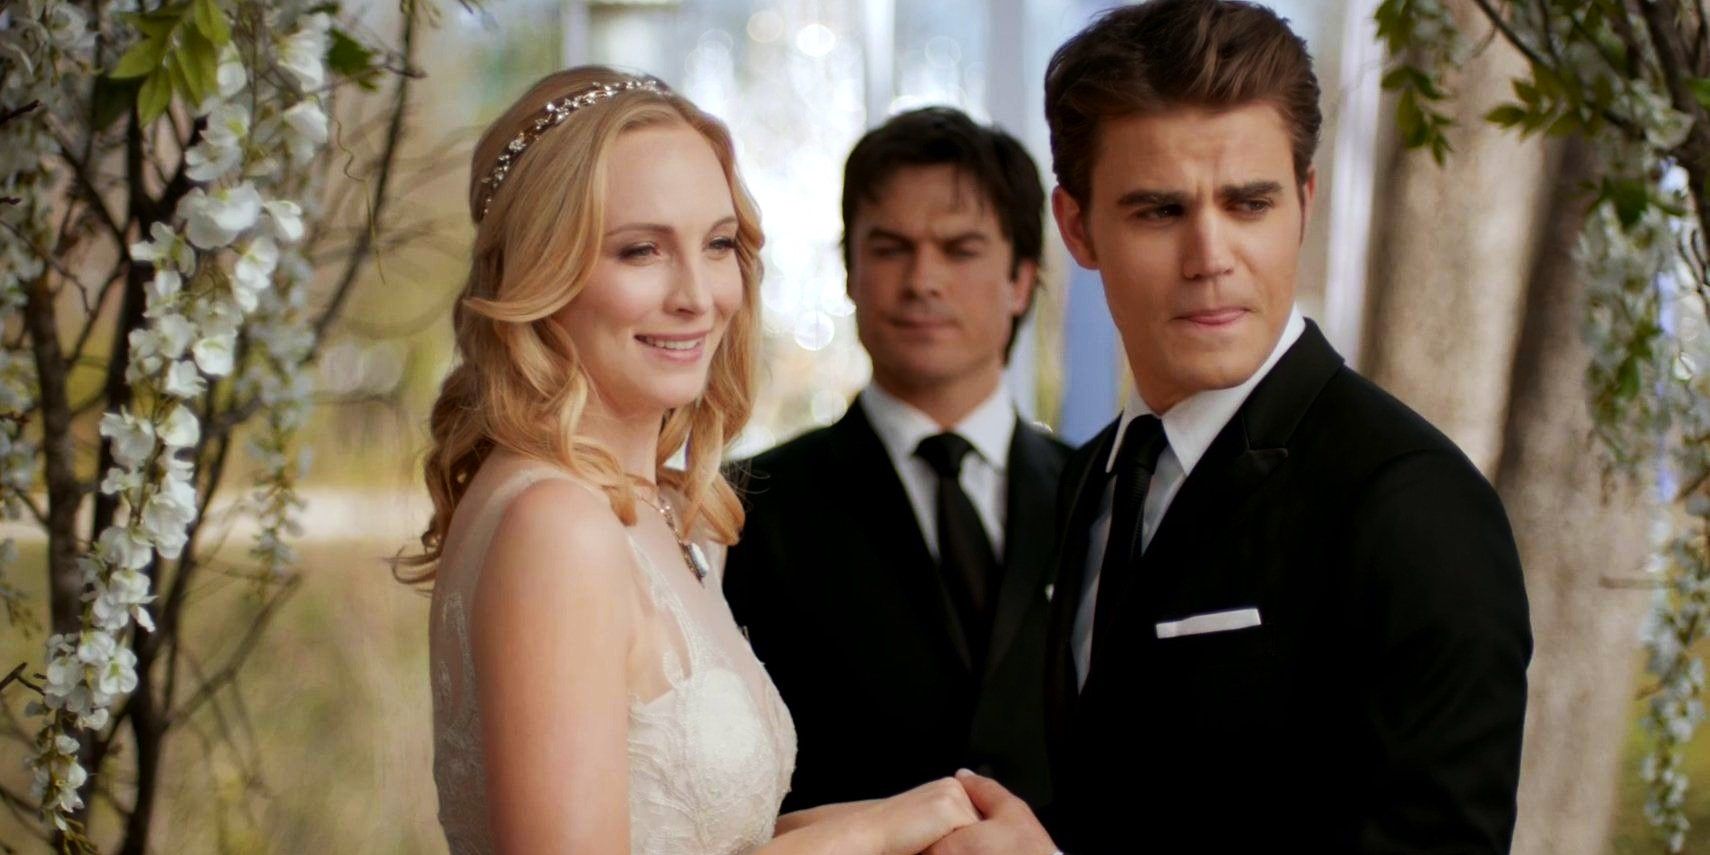 Stefan and Caroline get married in The Vampire Diaries